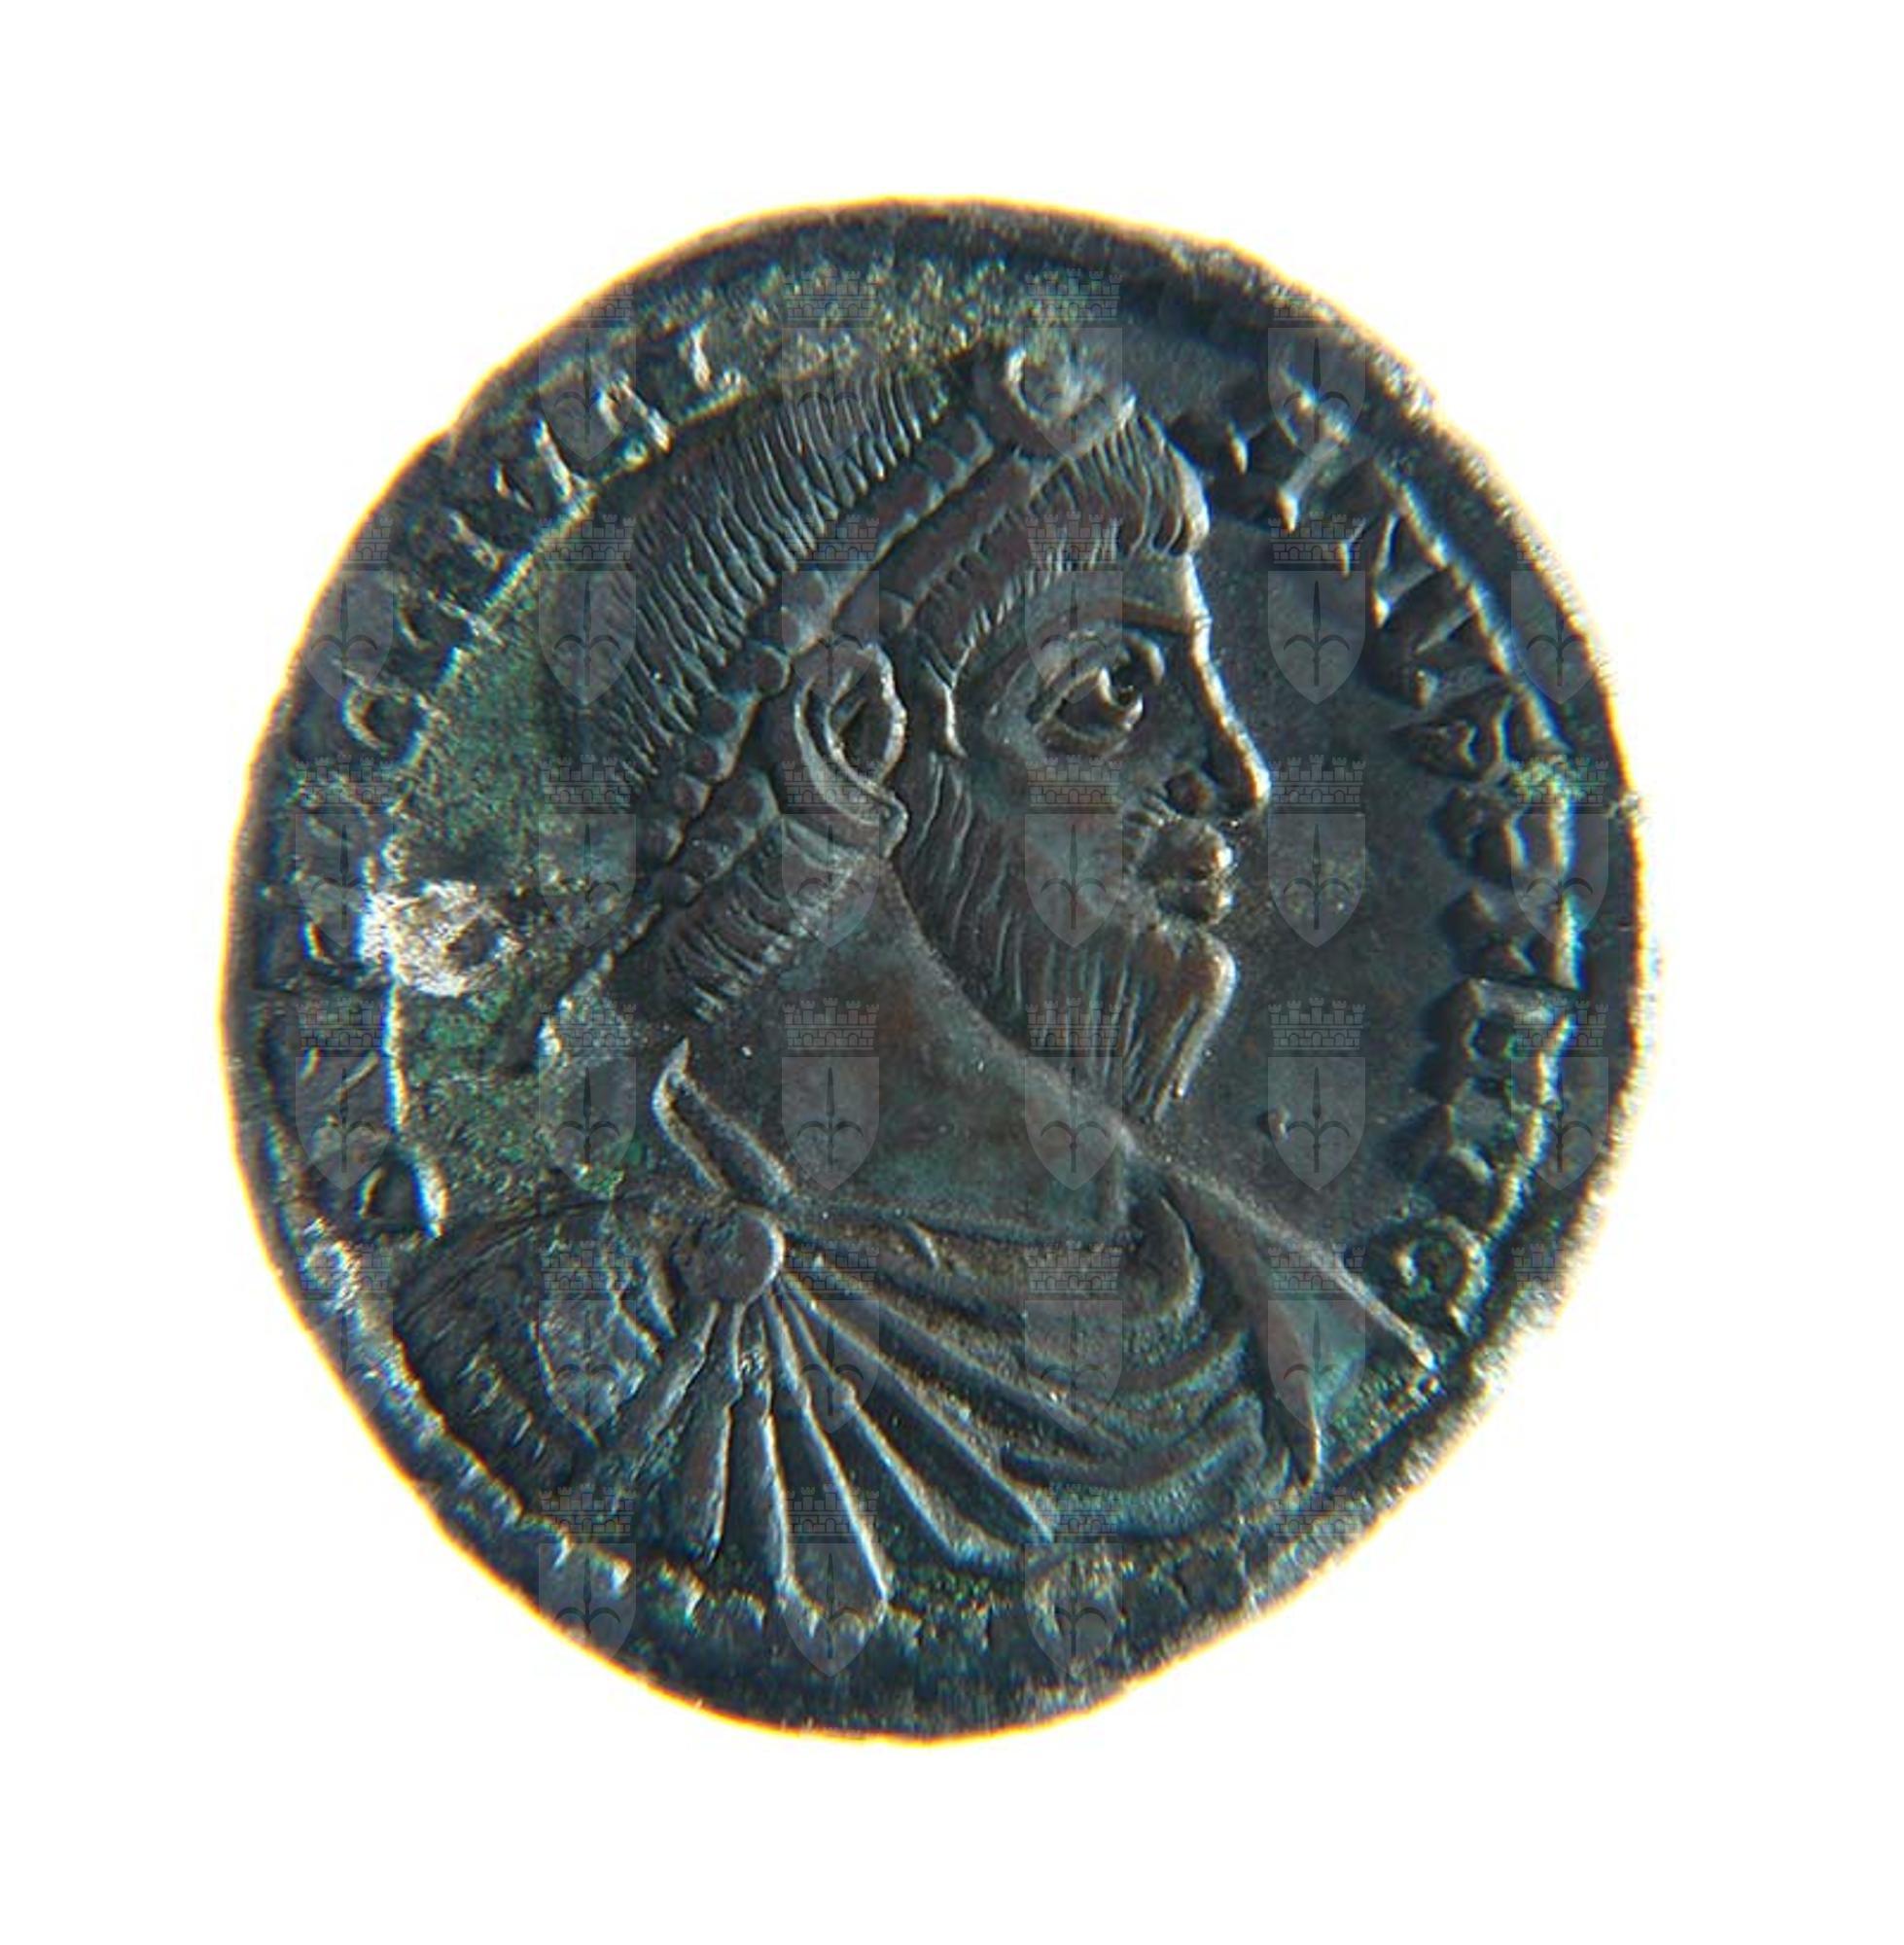 https://catalogomusei.comune.trieste.it/samira/resource/image/numismatica/CMSA_MAW_NU/CMSARA000000_Roma2870_a.JPG?token=651503b93eb1a